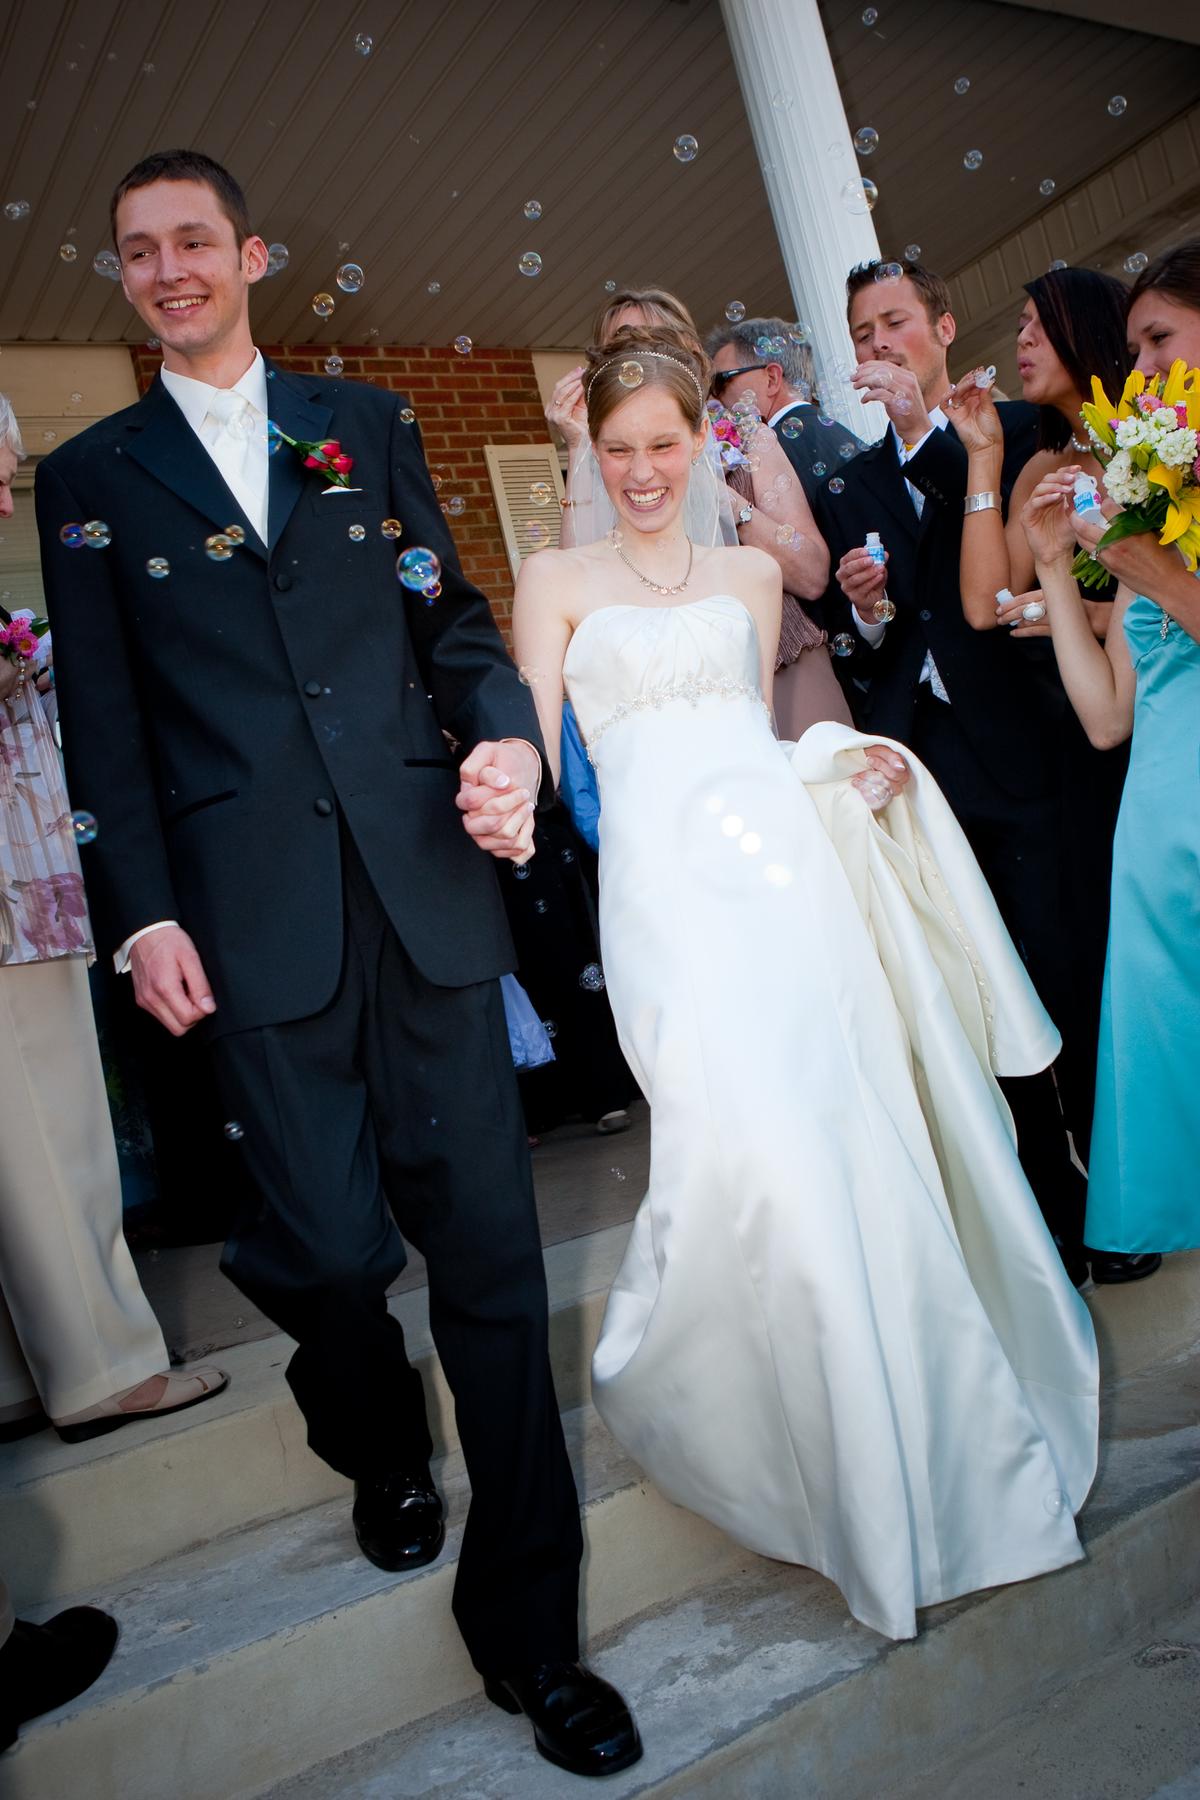 Joelle and Jim got married in 2009. (Courtesy of <a href="http://www.fromscratchfarmstead.com/">From Scratch Farmstead</a>)